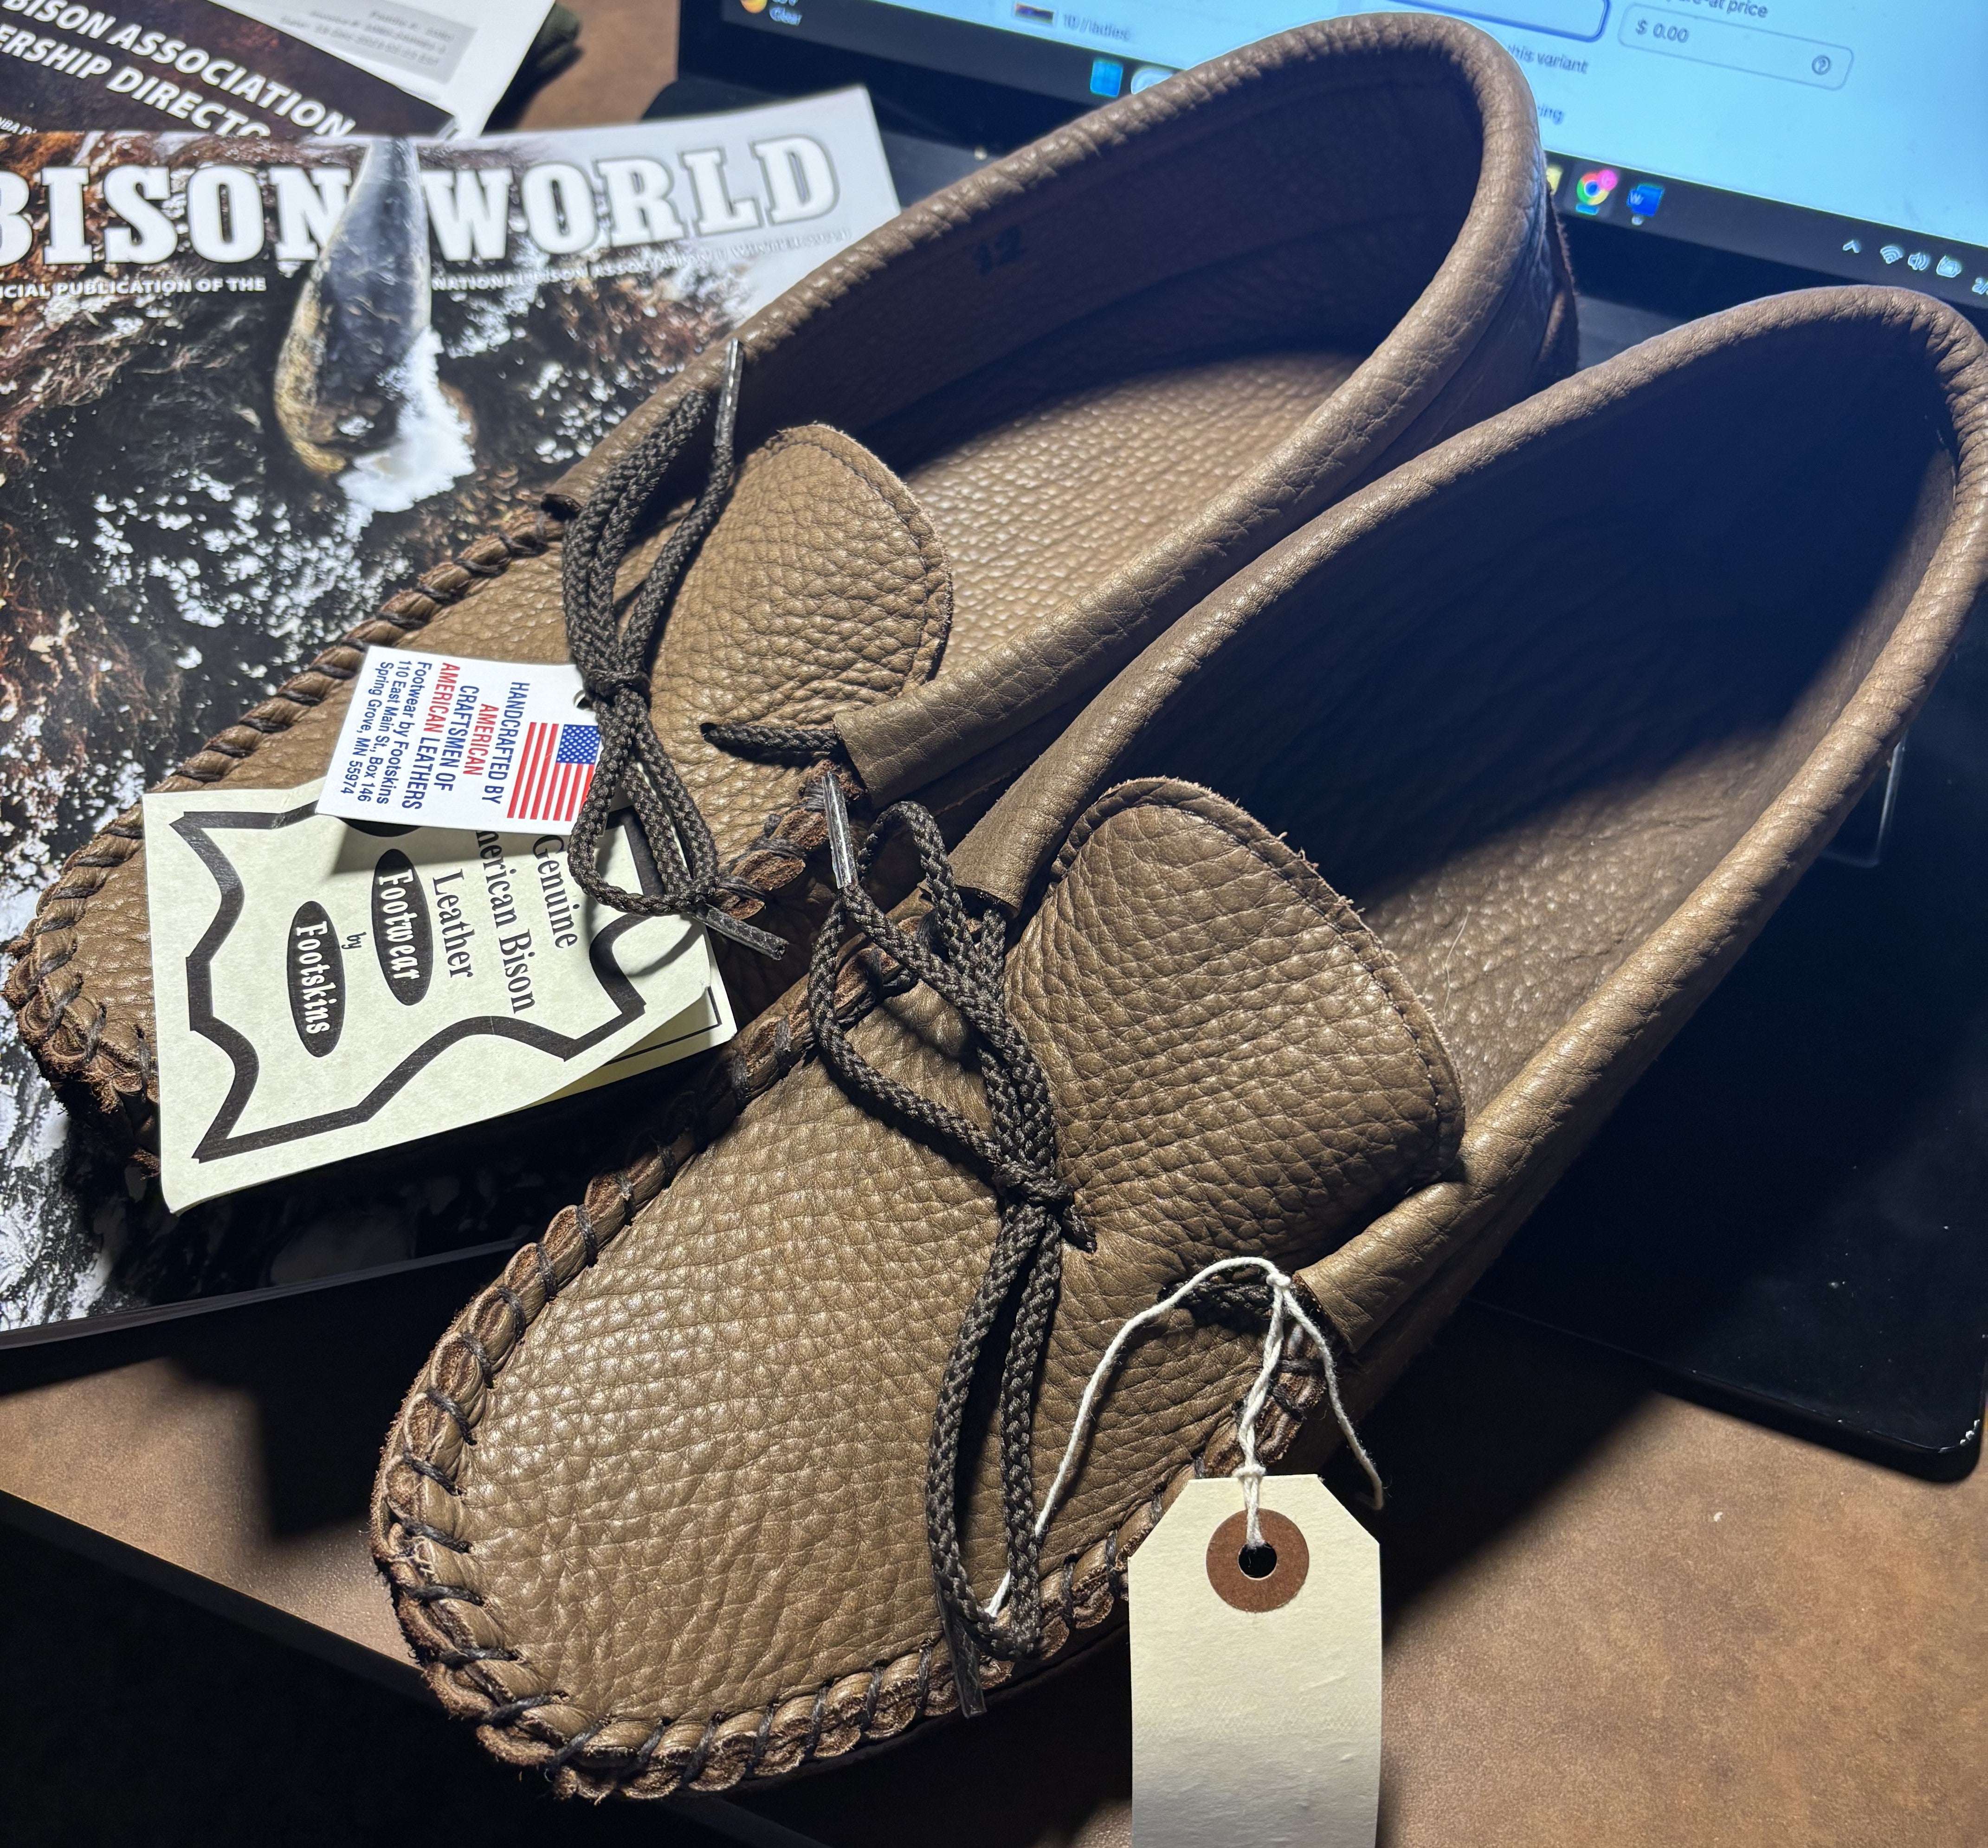 Footskins bison leather slipper/moccasins - style #4440